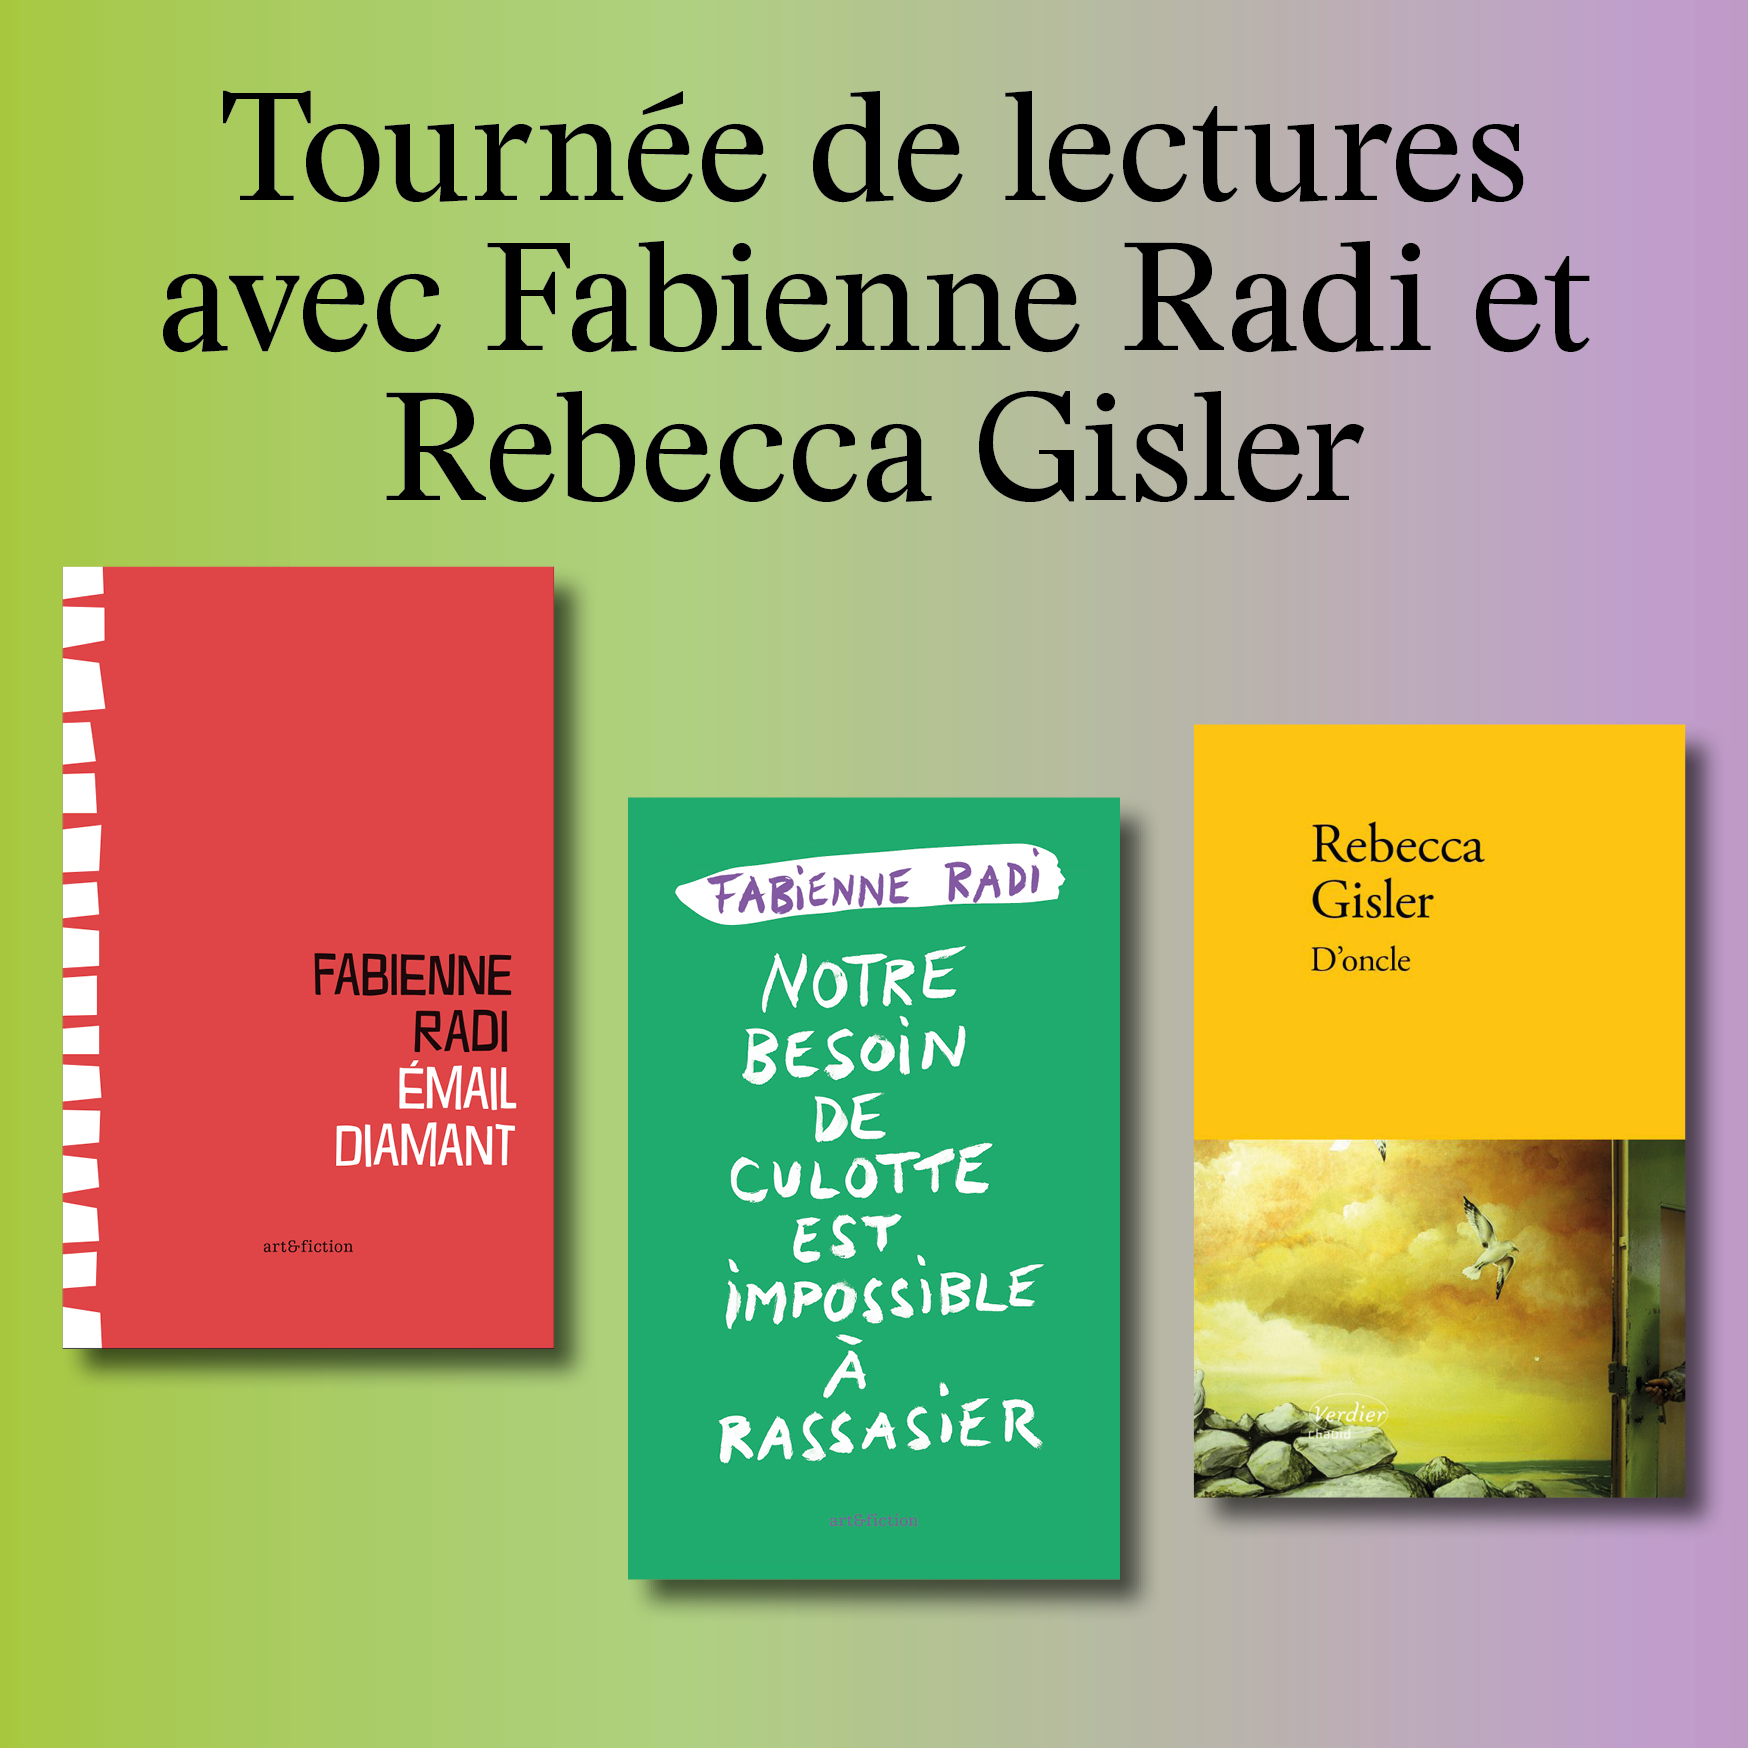 Lecture de Fabienne Radi et Rebecca Gisler